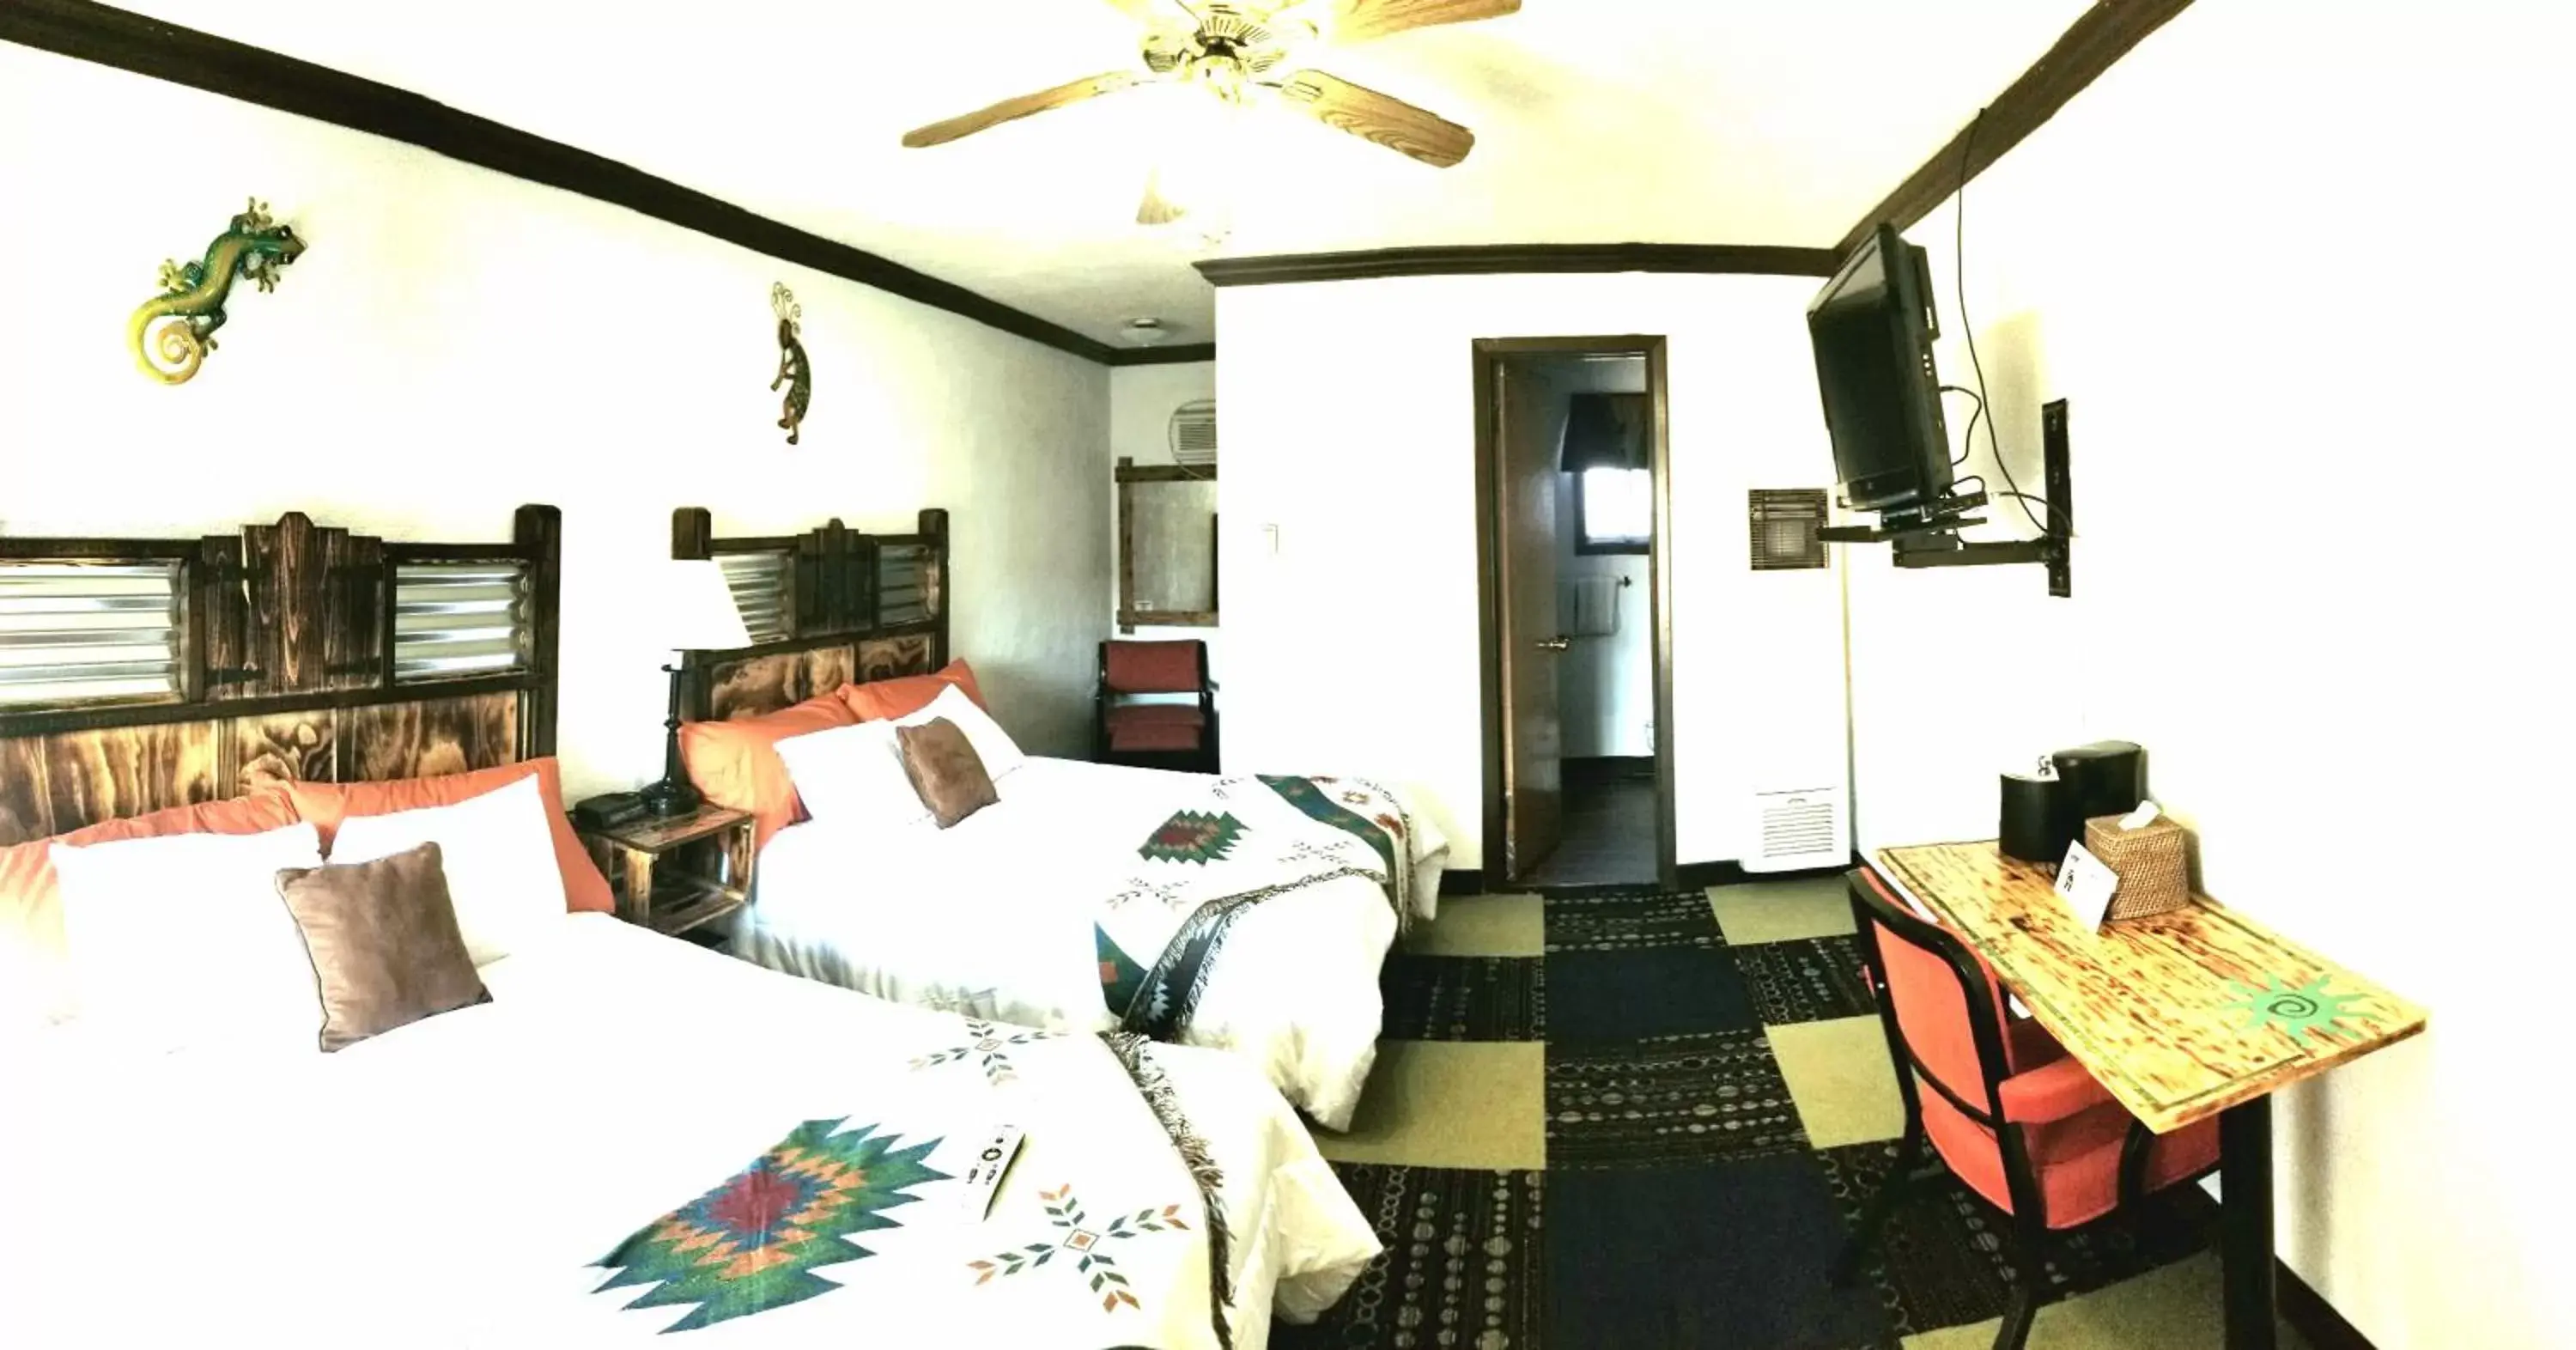 Adobe Sands Motel